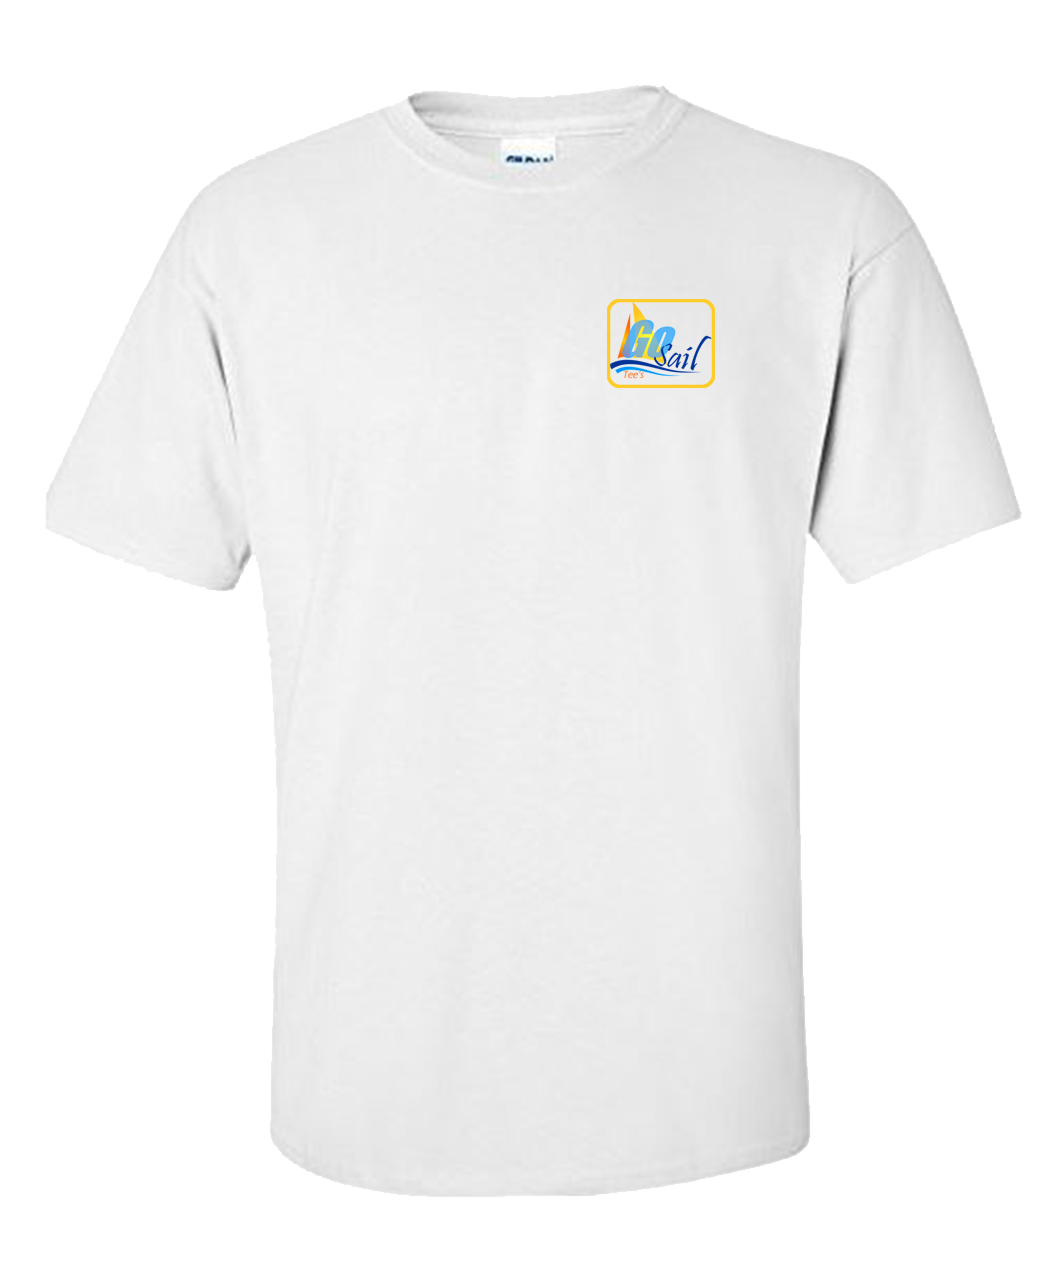 Rocks Your Boat Unisex T-Shirt